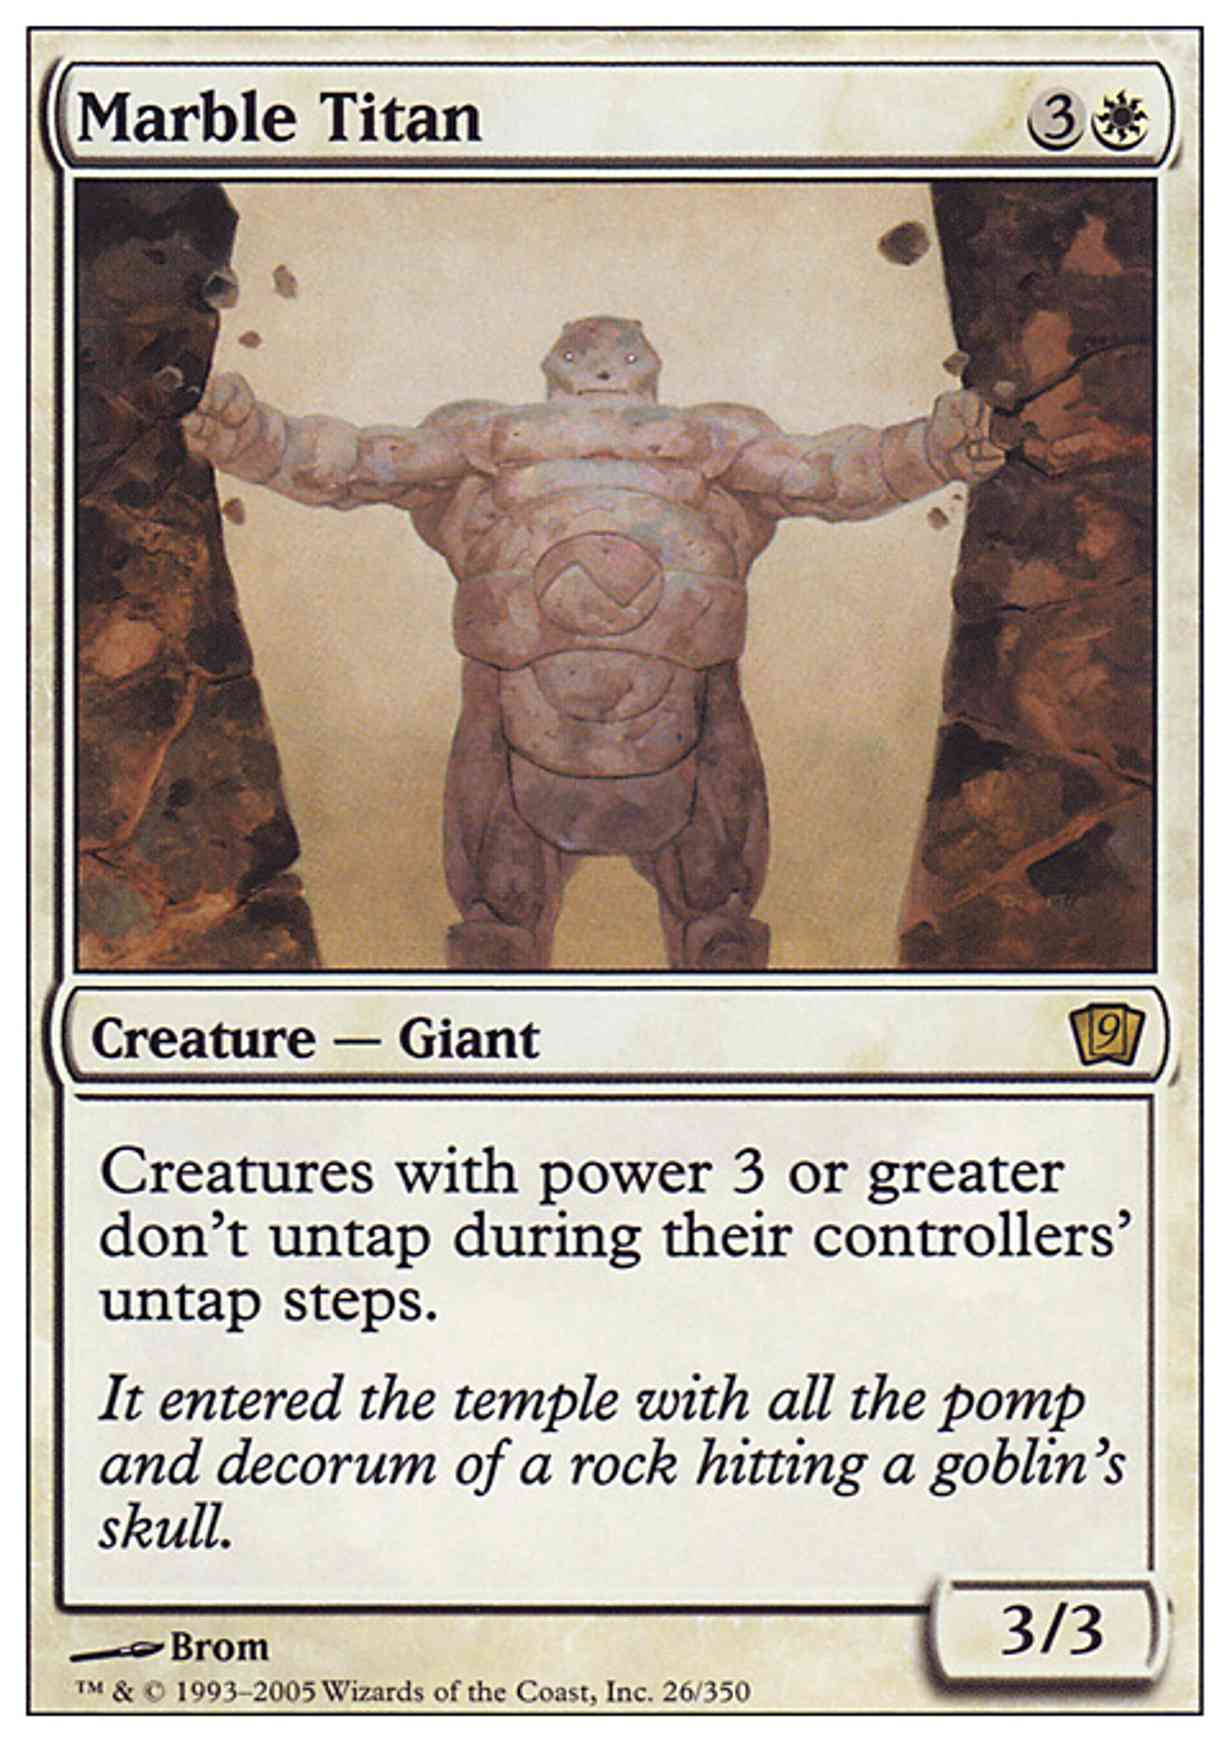 Marble Titan magic card front